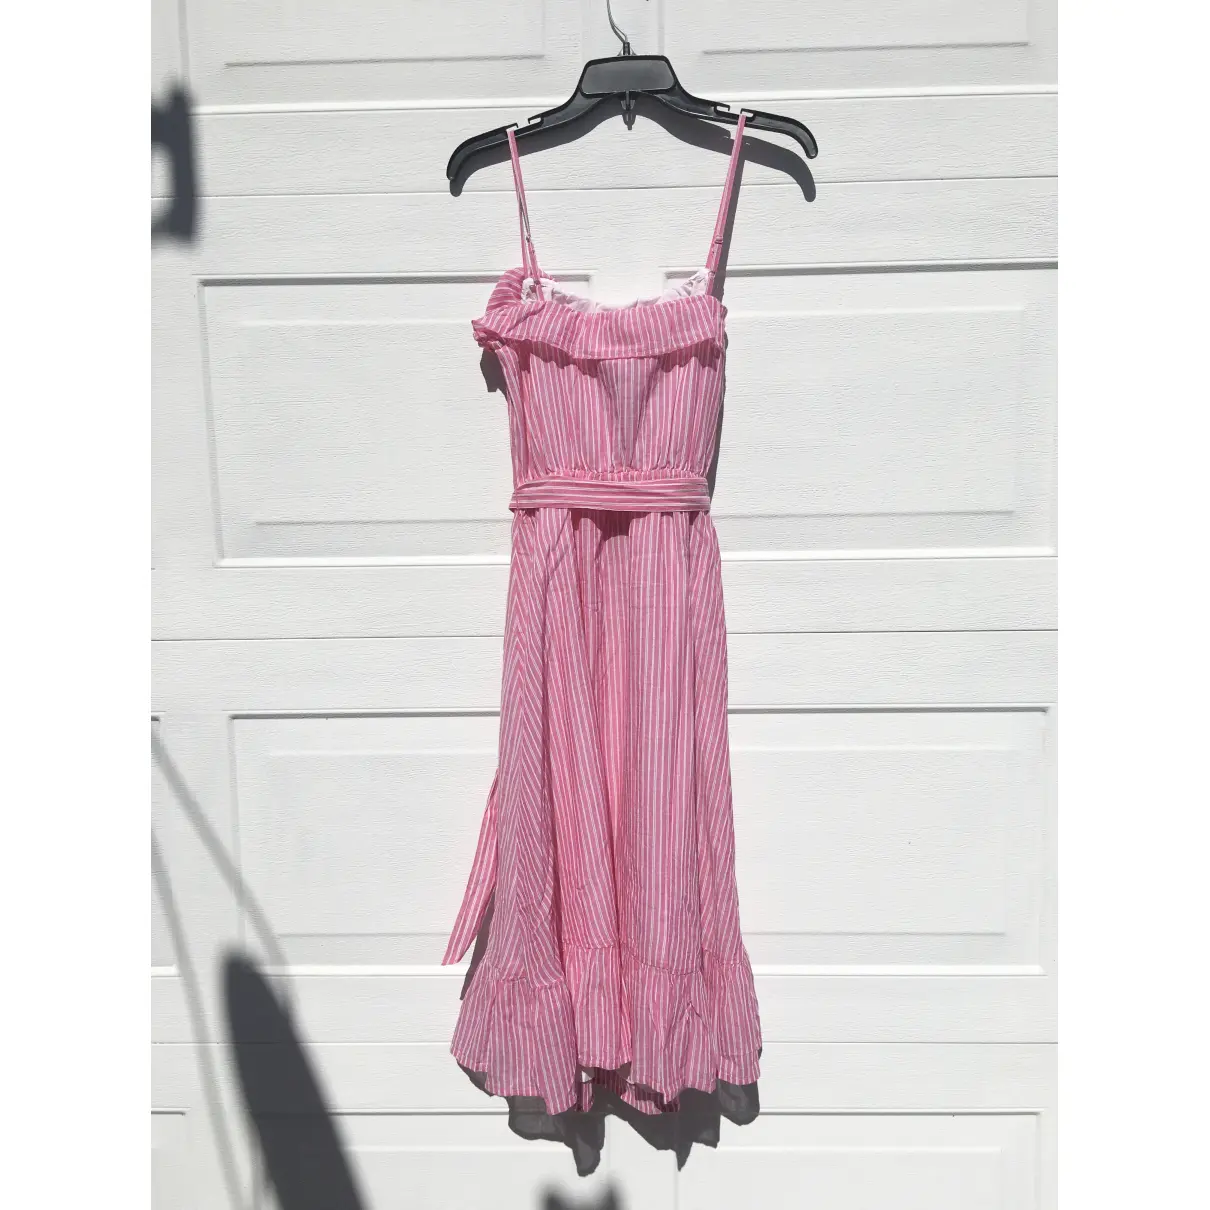 Buy Sézane Spring Summer 2020 mid-length dress online